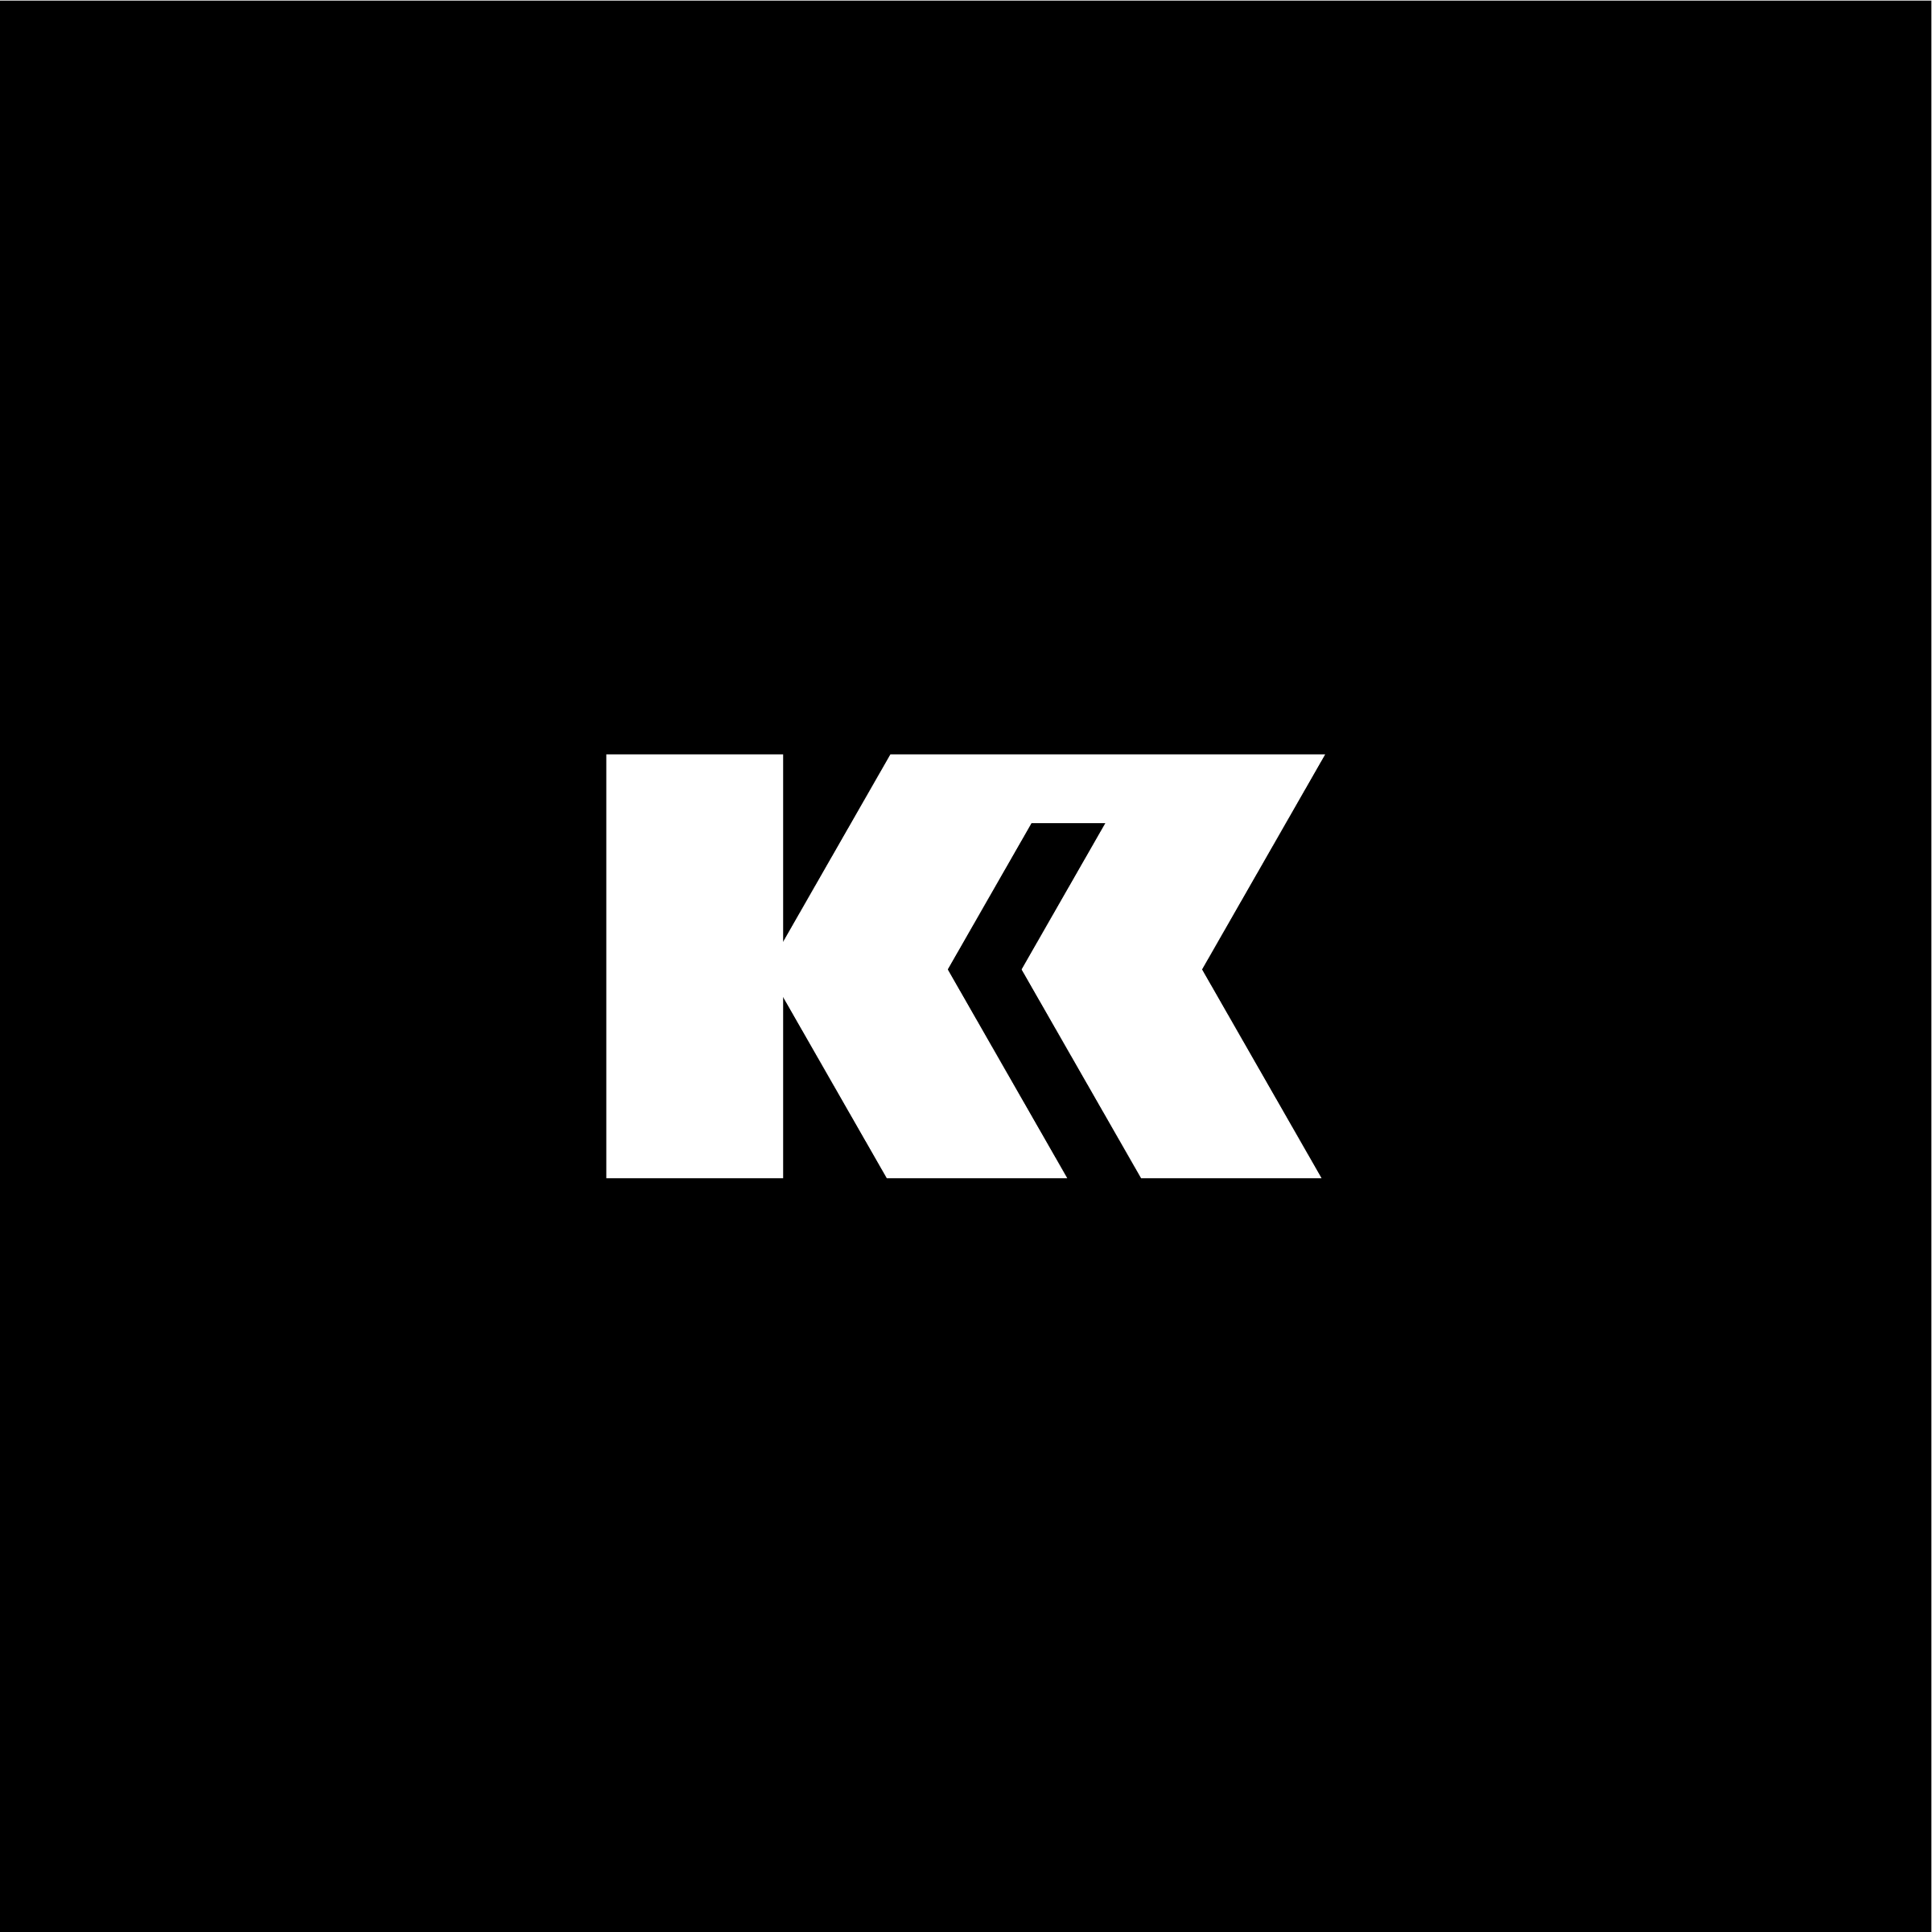 KR+Monogram logo design by logo designer Mirka+Studios for your inspiration and for the worlds largest logo competition